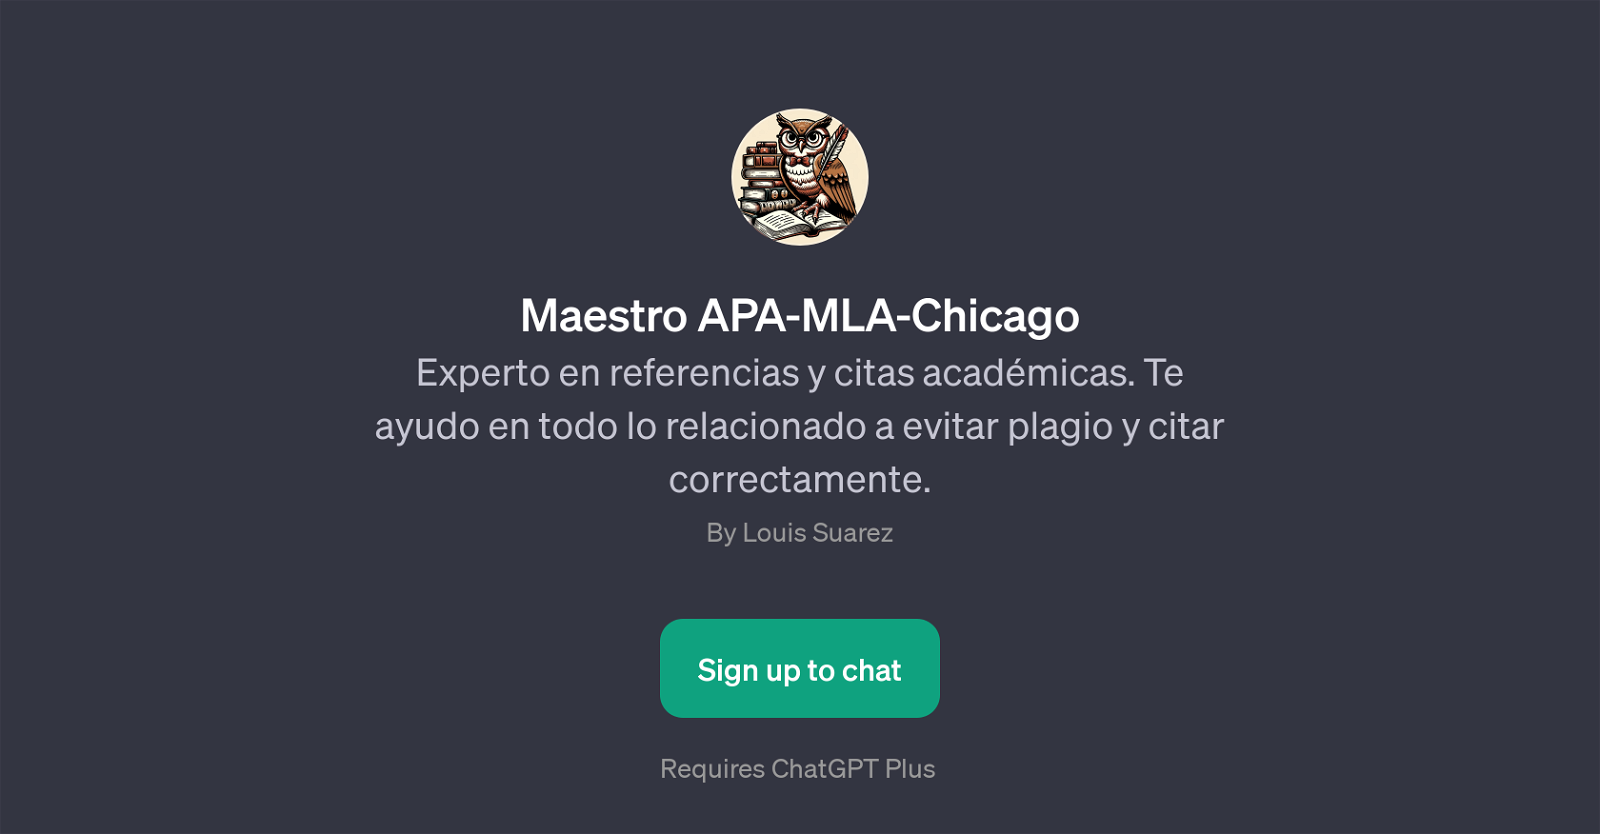 Maestro APA-MLA-Chicago website